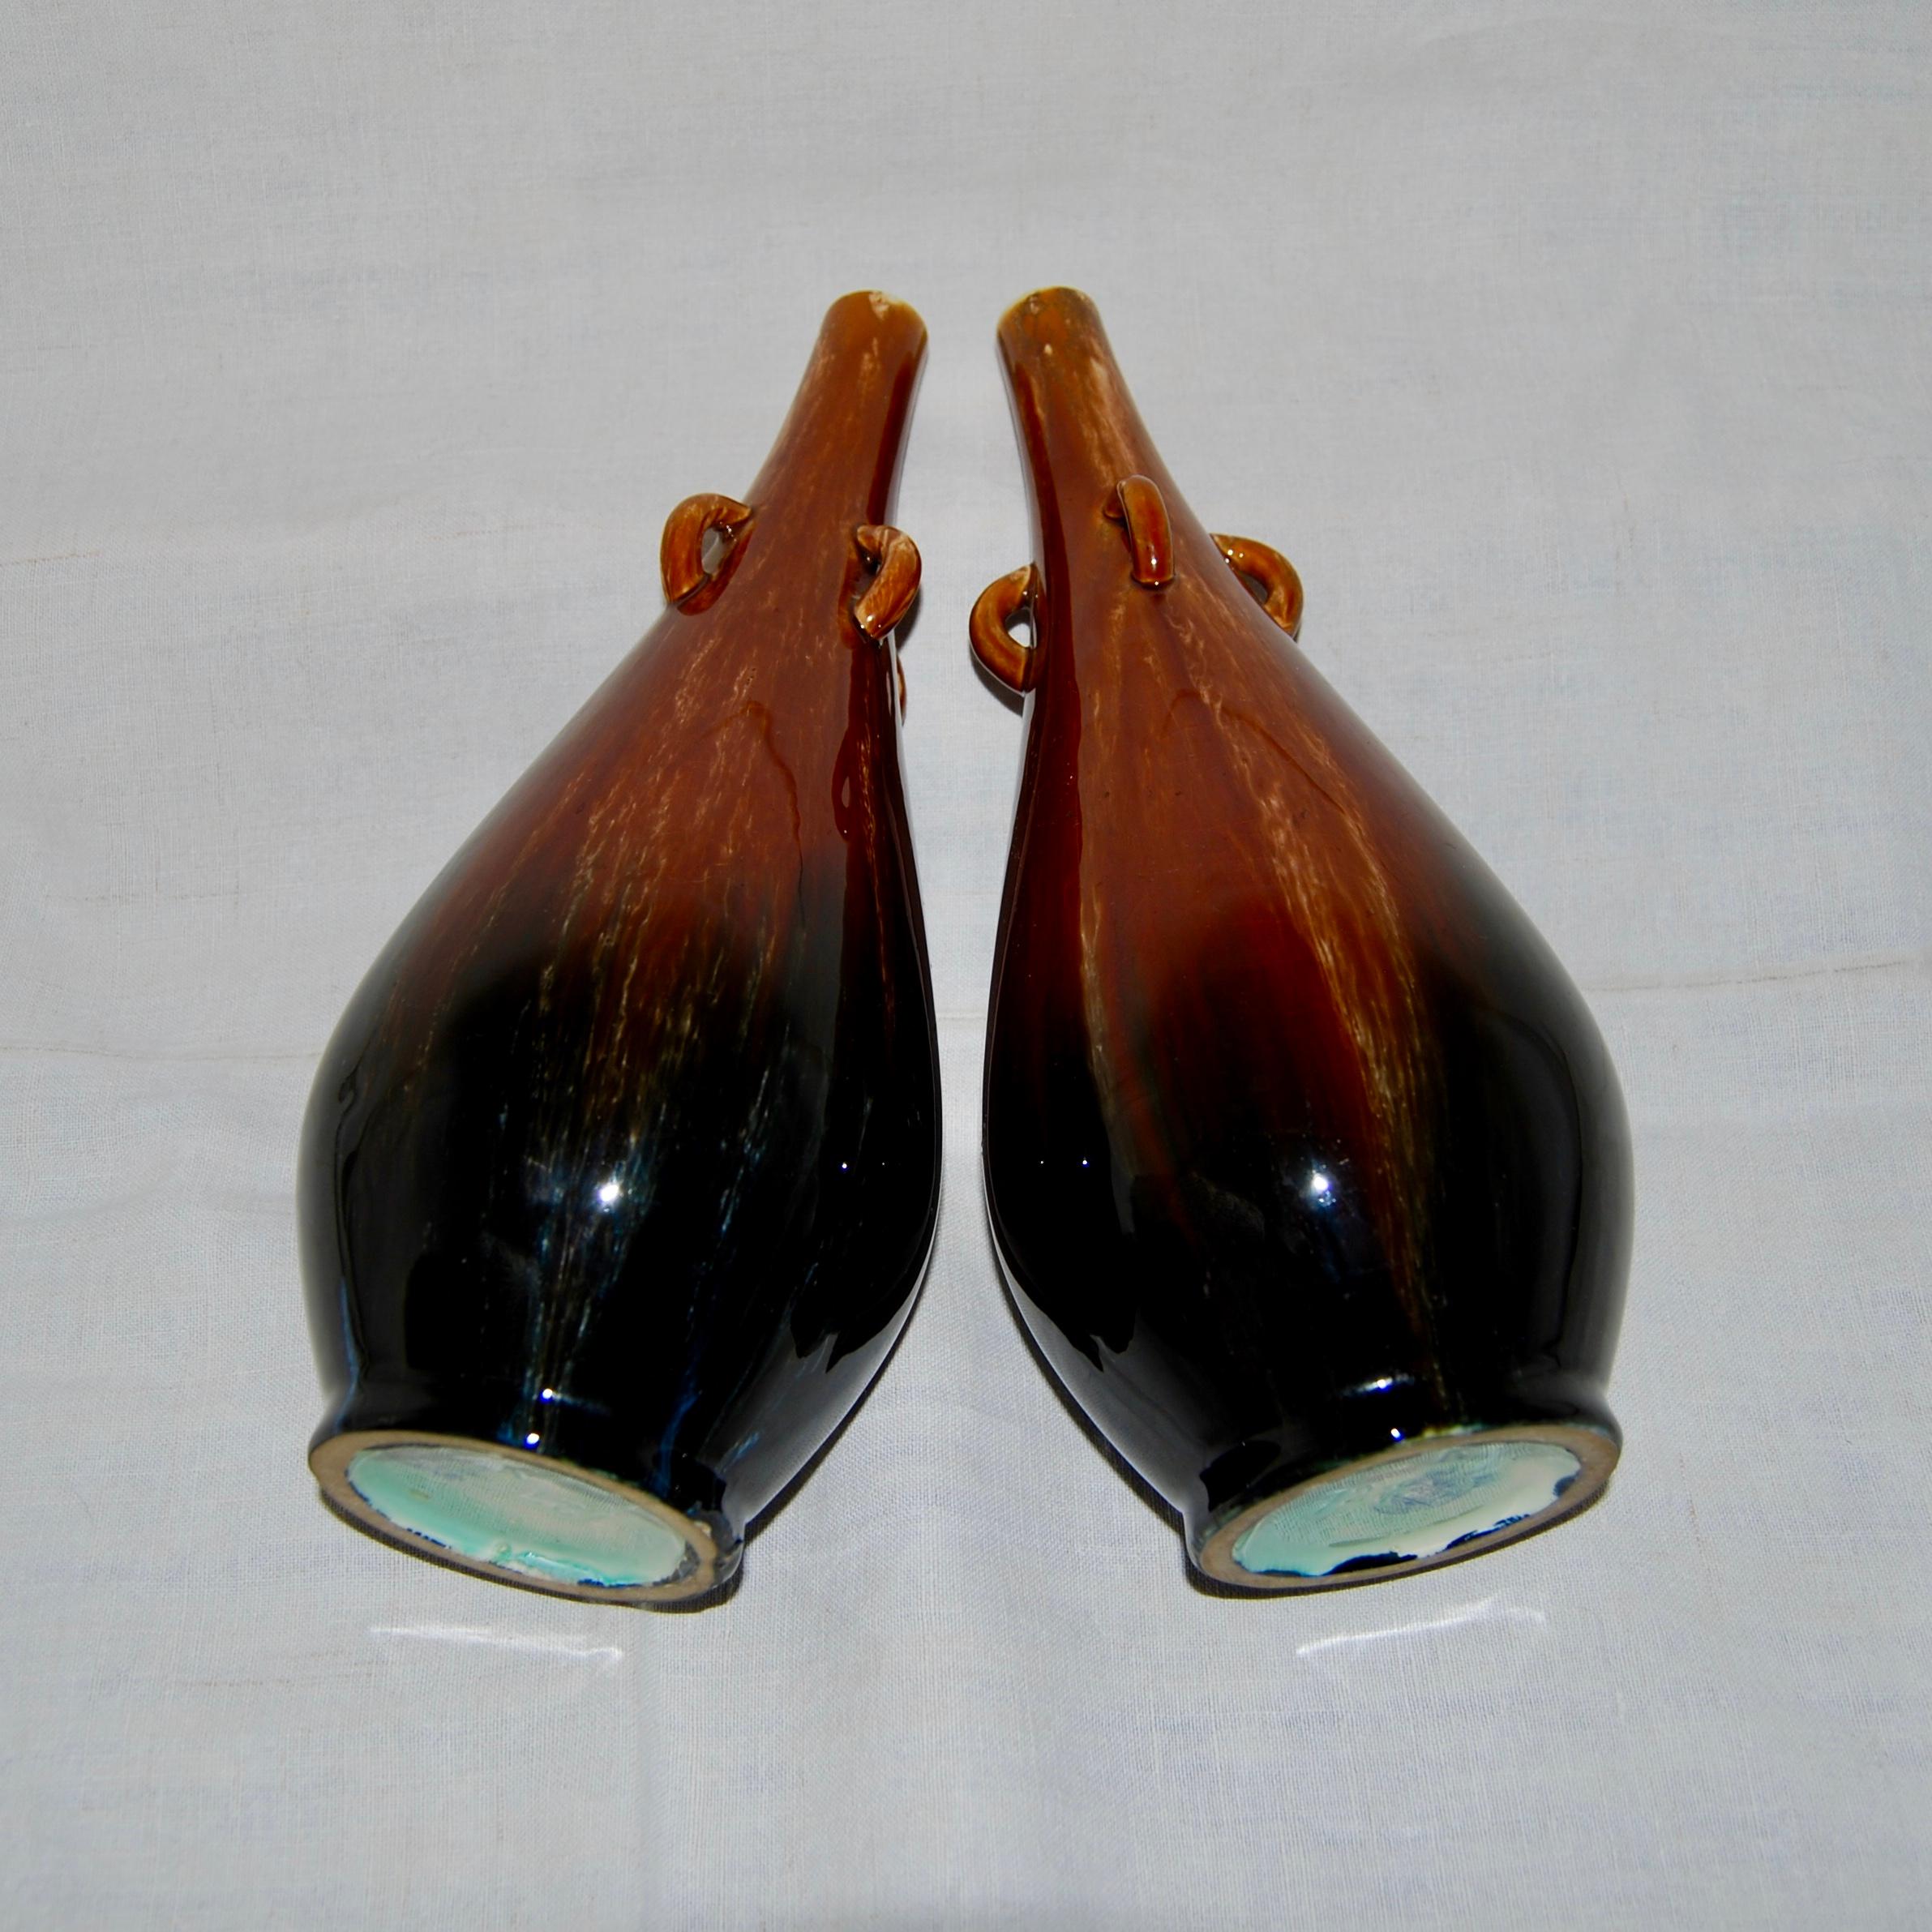 Hand-Crafted Pair of Ceramic Vases by Boch Frères La Louvière, Belgium, 1930